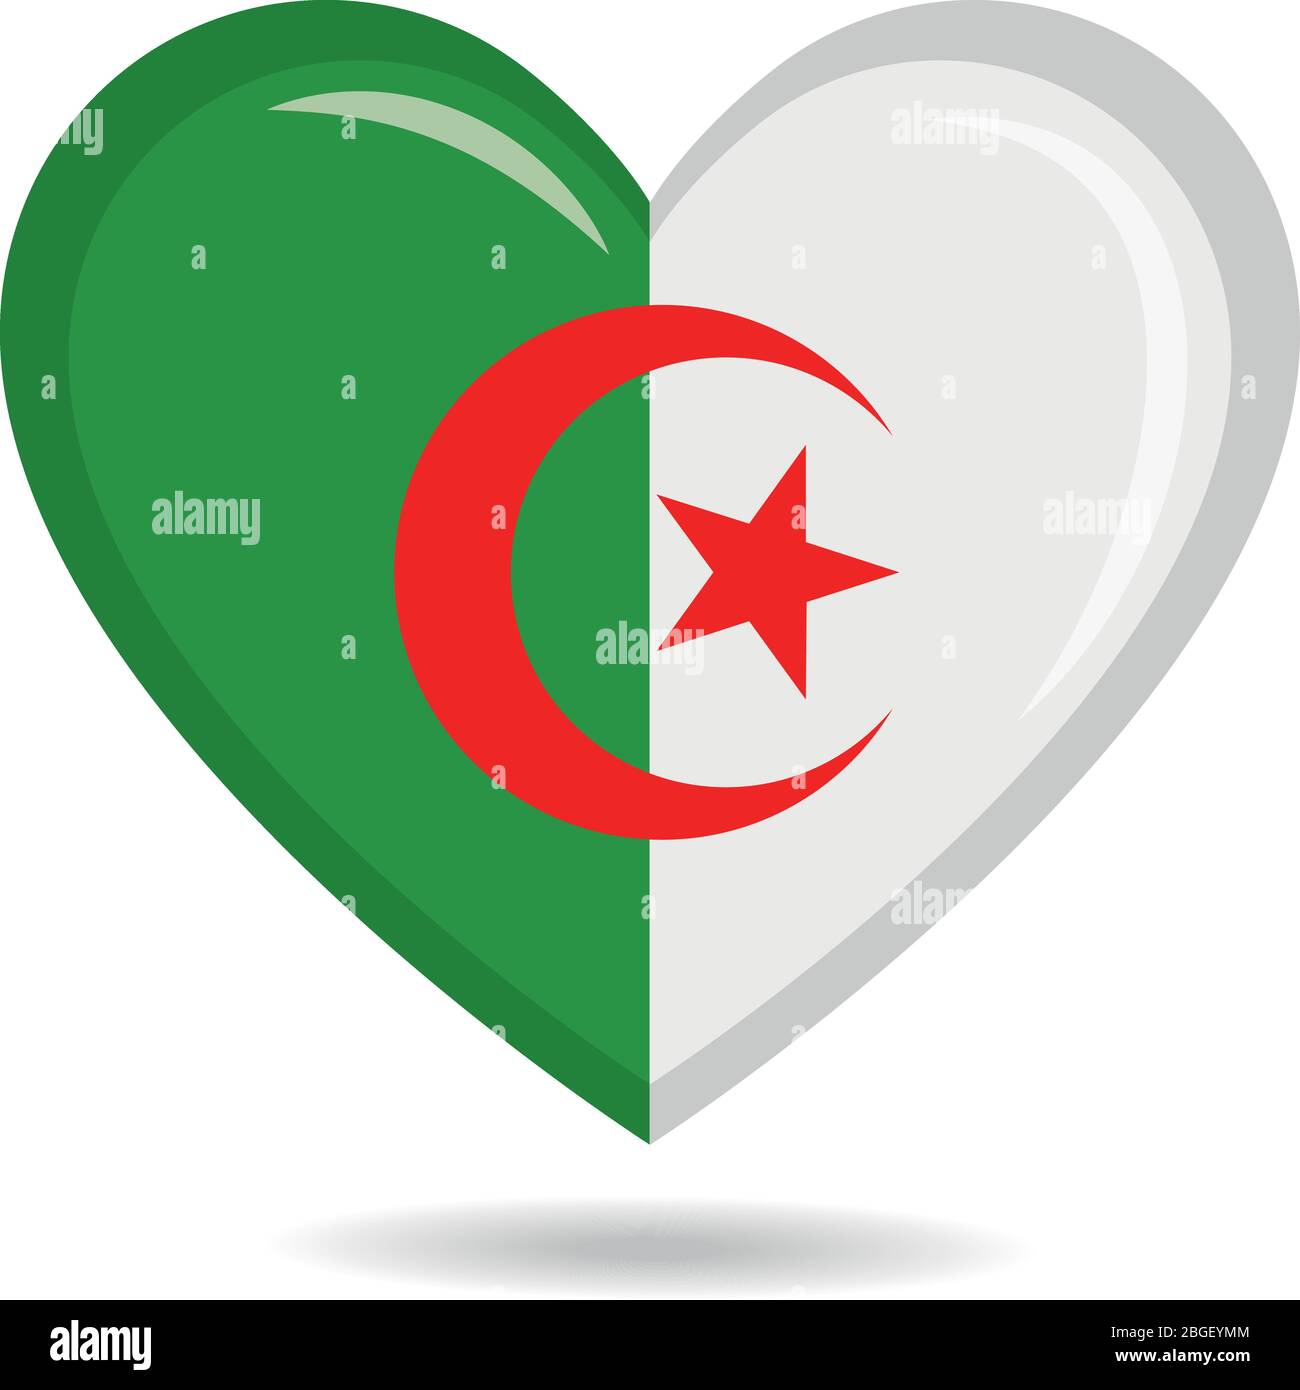 Algeria national flag in heart shape vector illustration Stock Vector